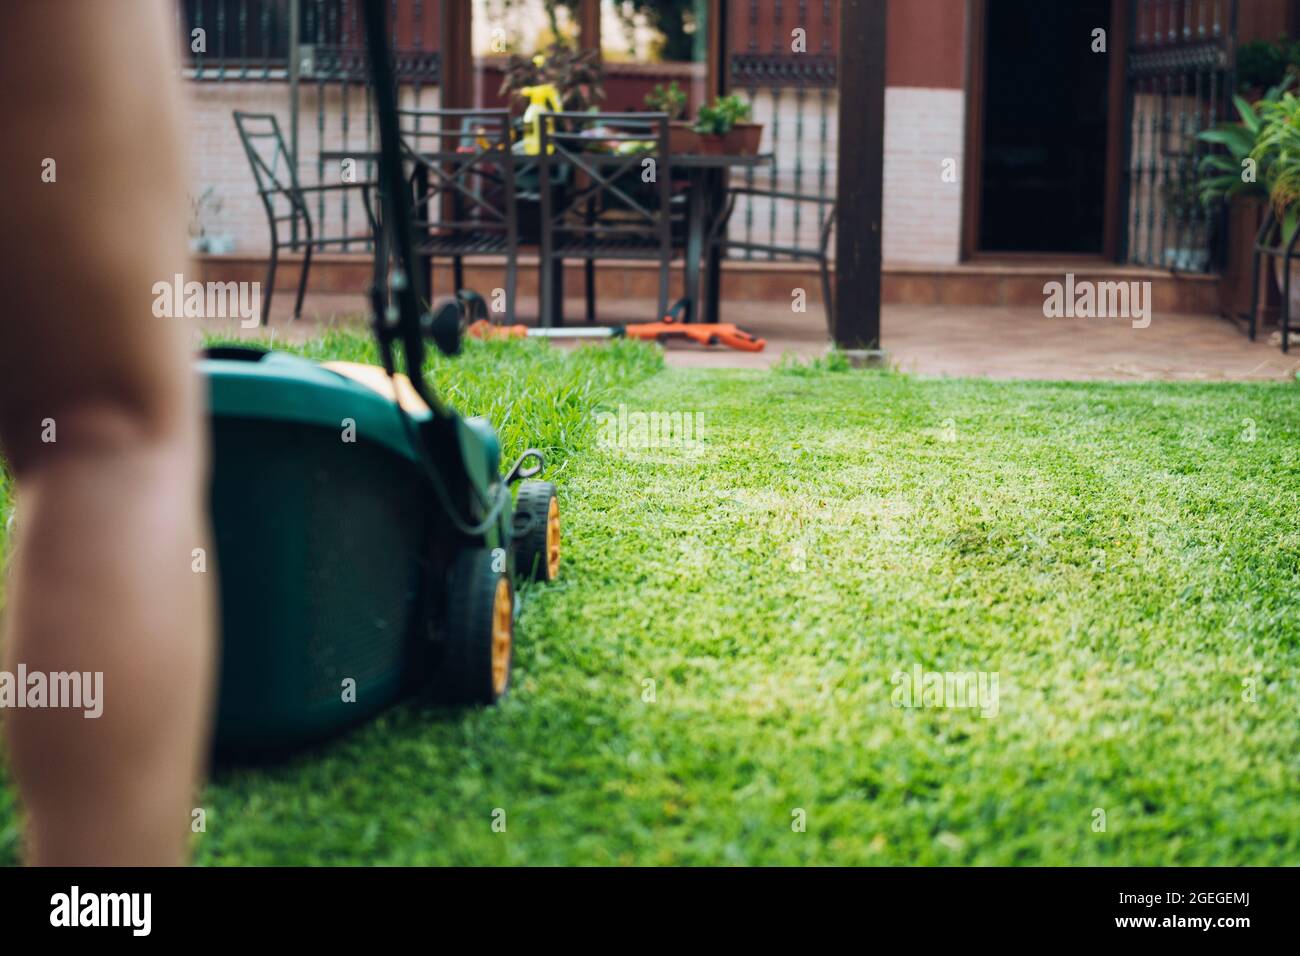 unrecognizable person using lawn mowers in his garden Stock Photo